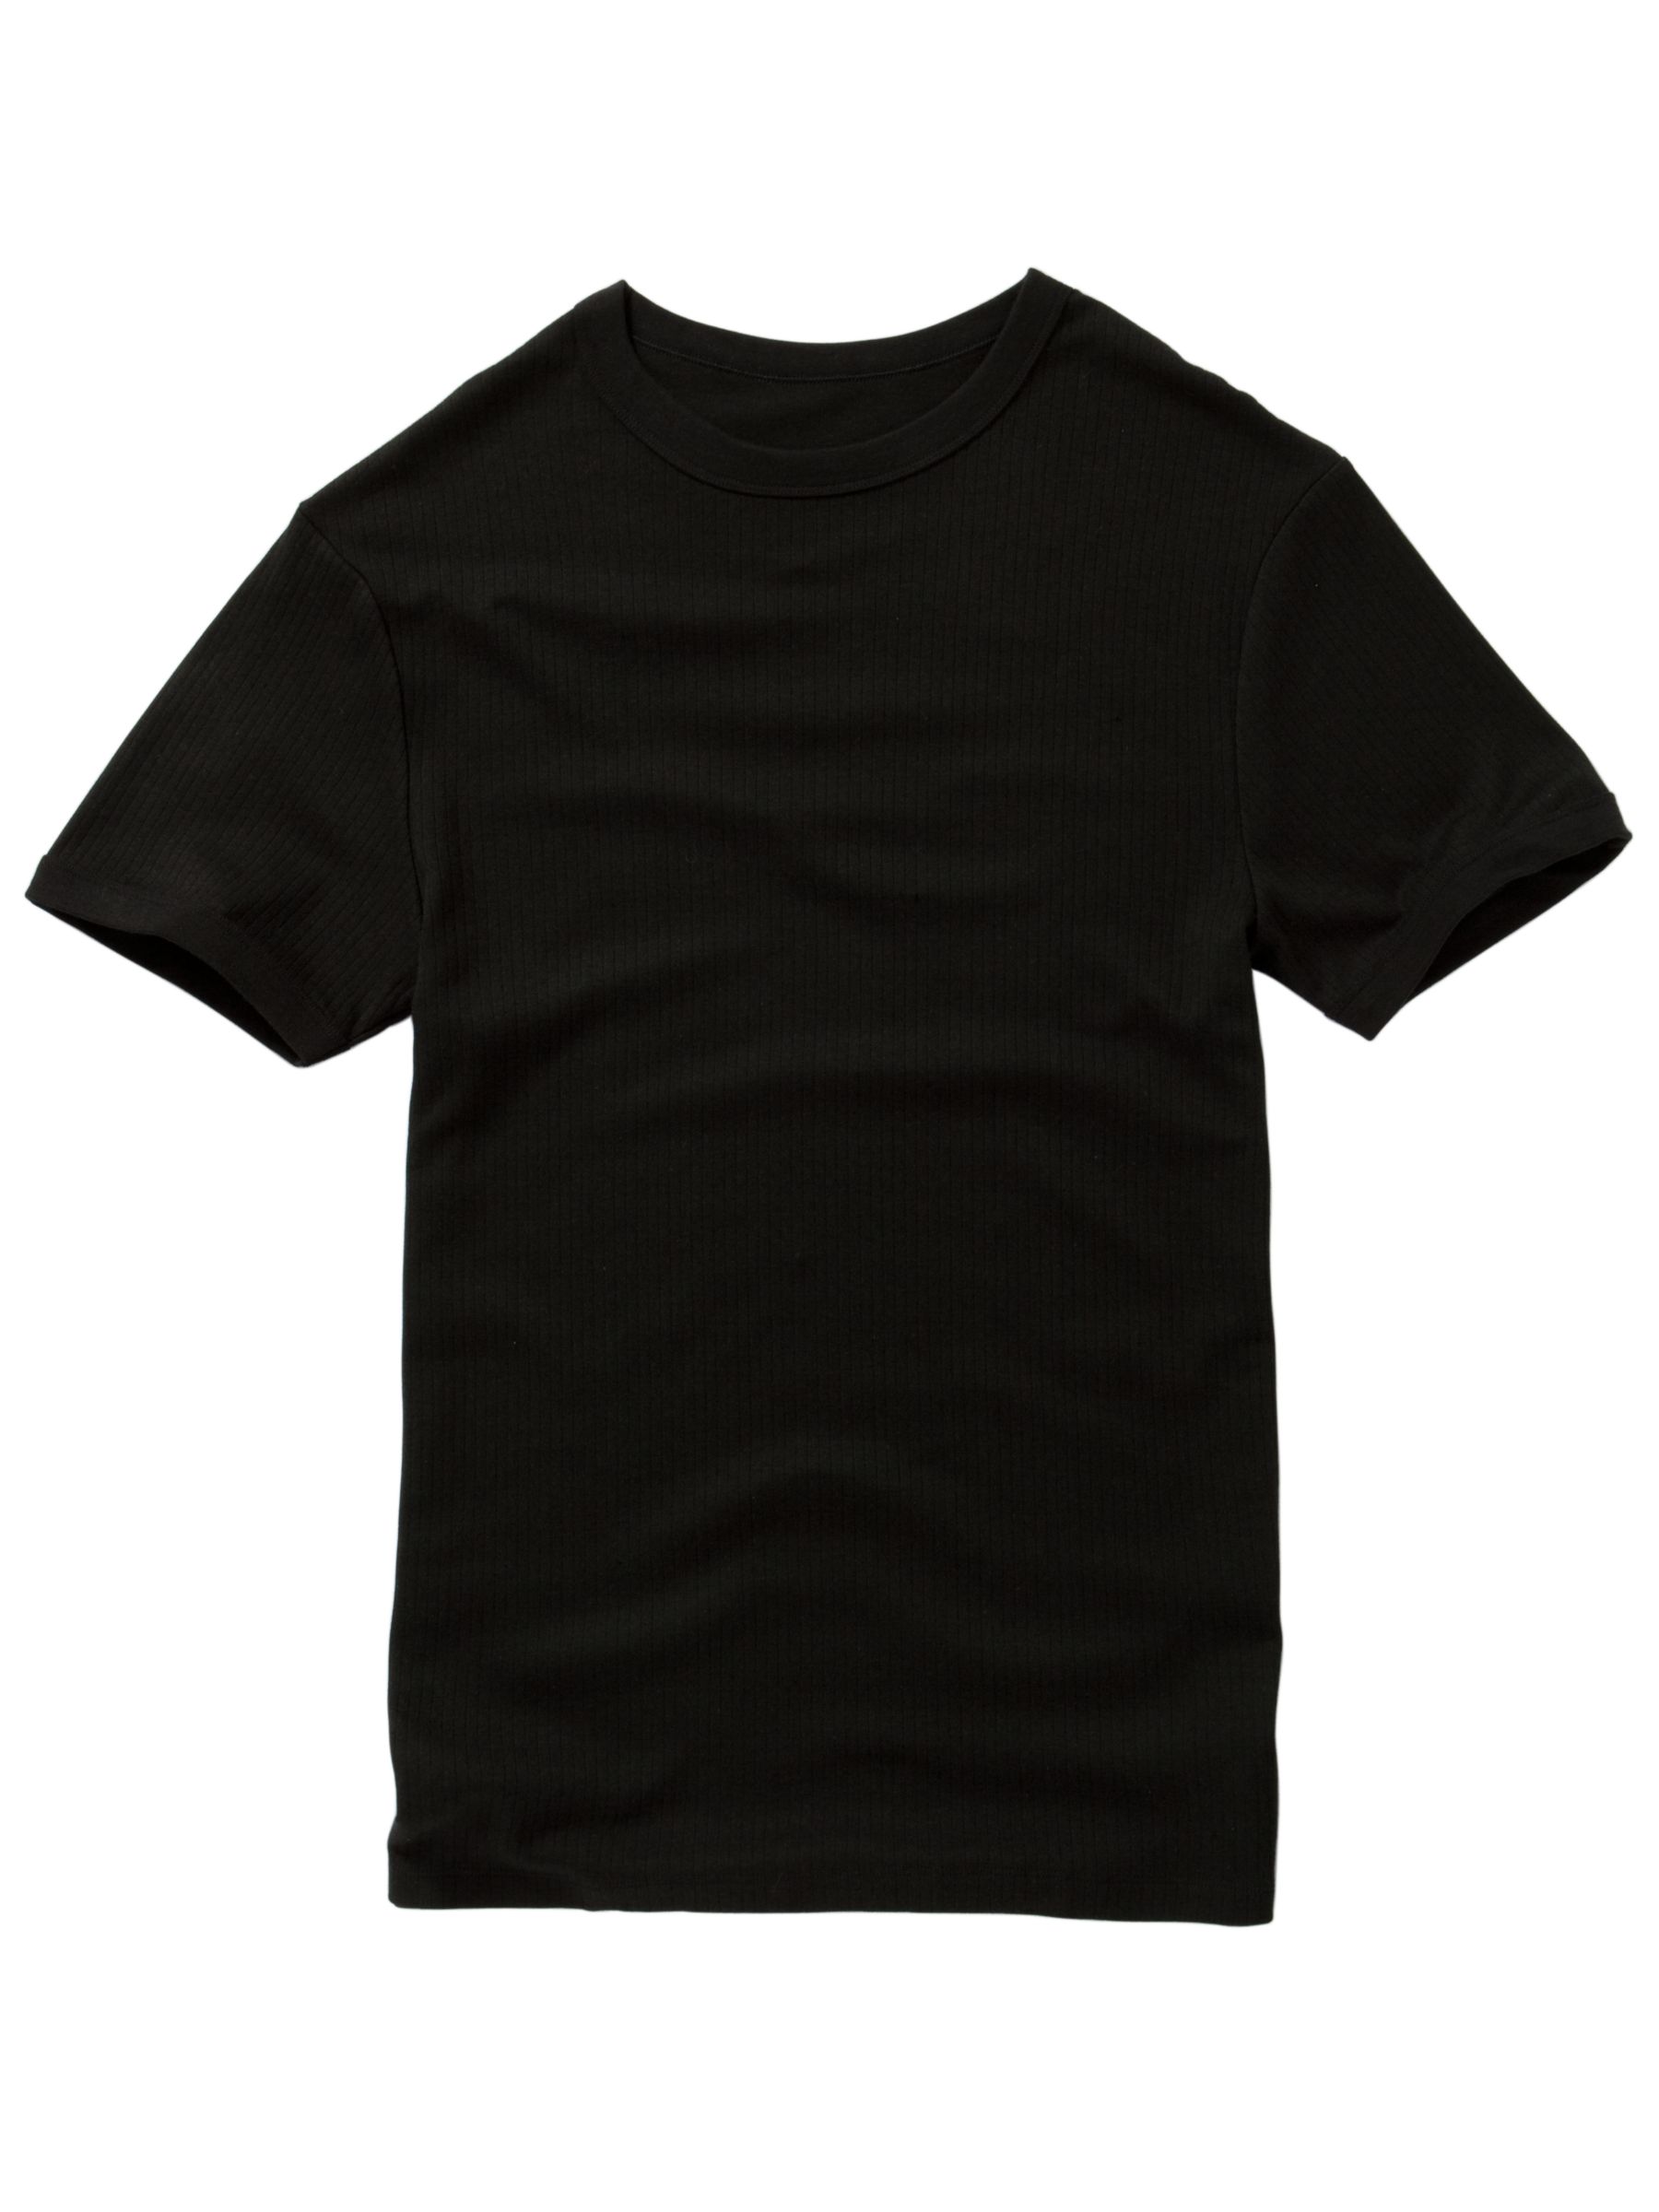 Thermal Short Sleeve T-Shirt, Black